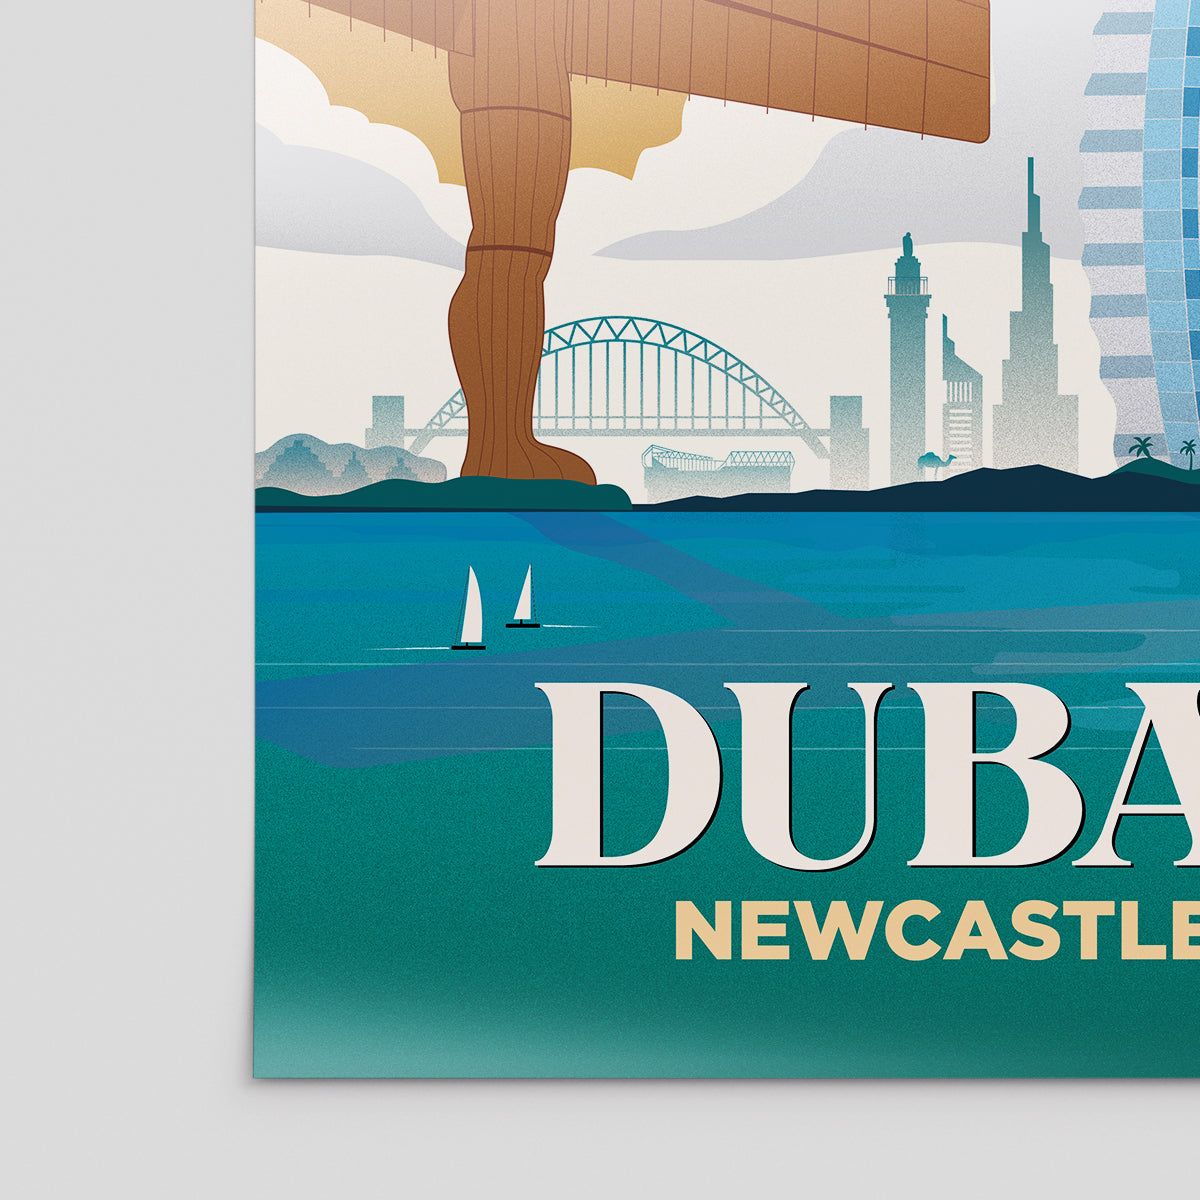 Dubai x Newcastle Print